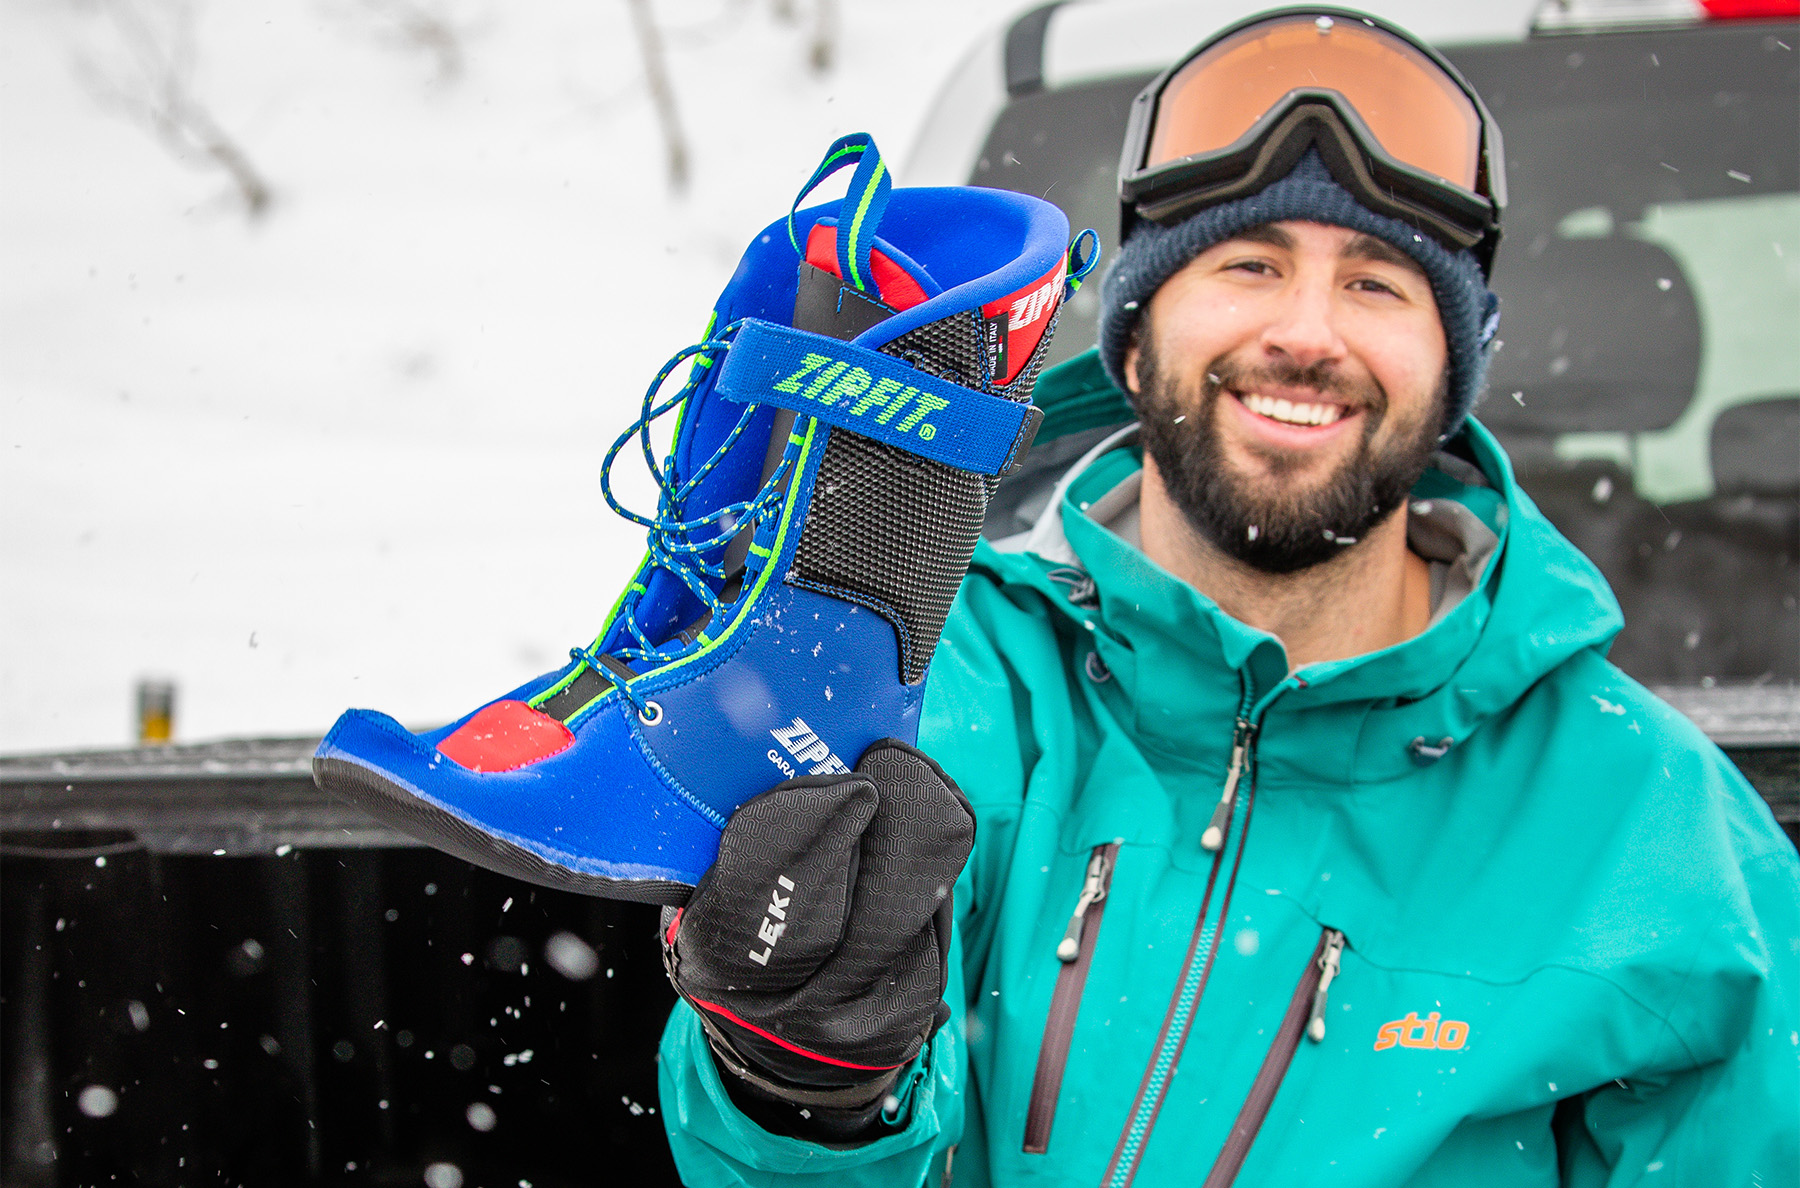 The Best Custom Fit Ski Boot Liners - ZipFit